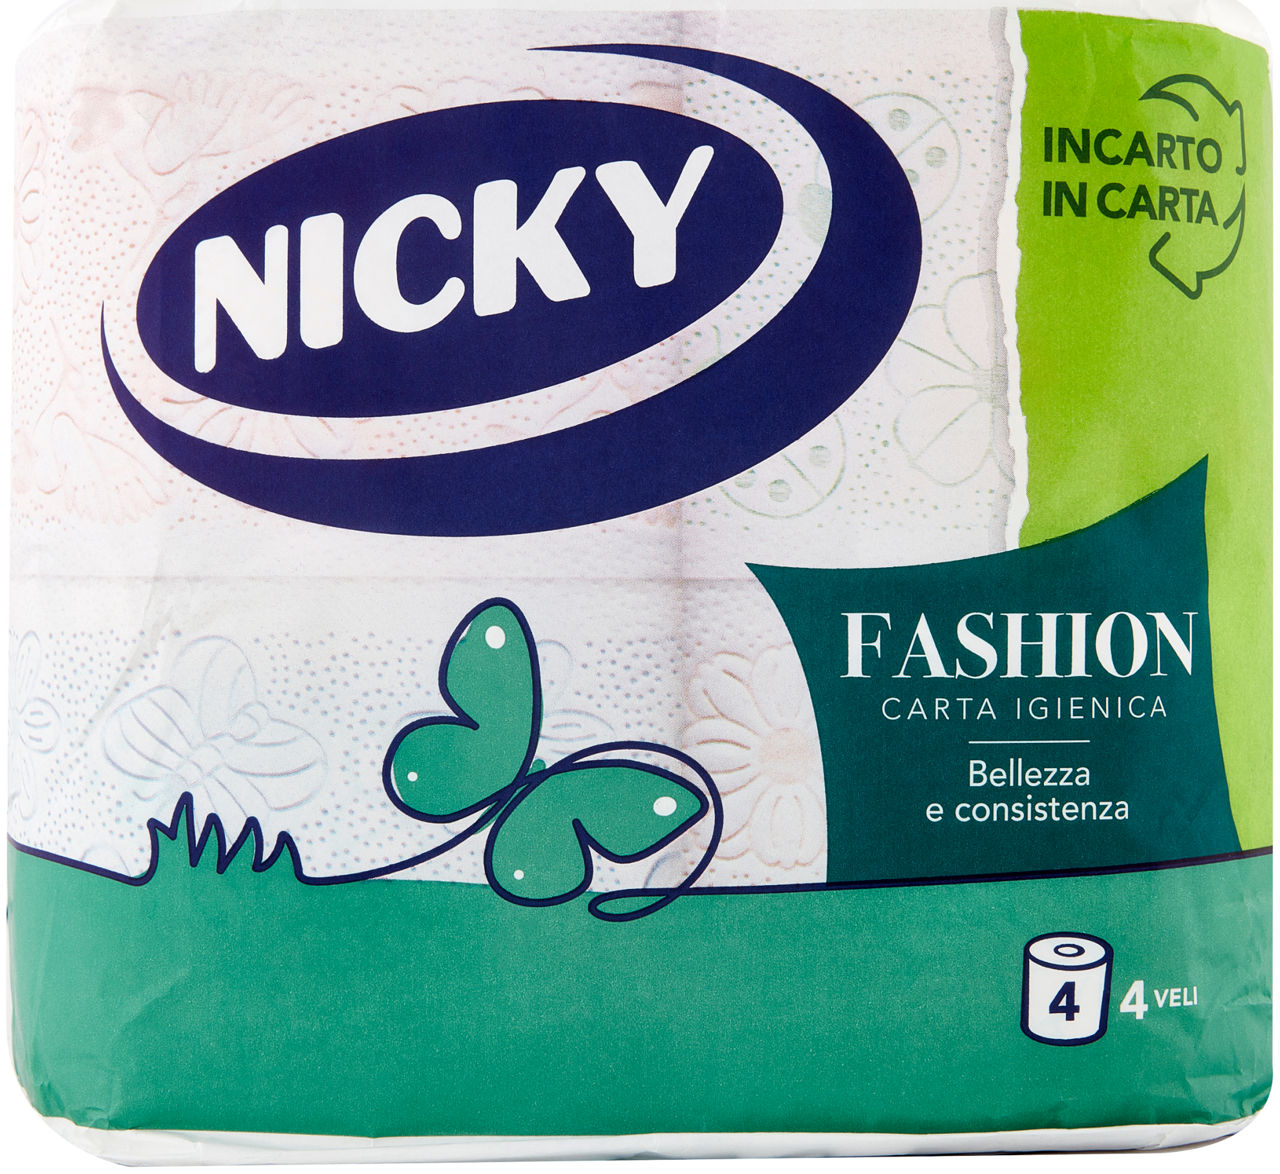 Carta igienica nicky fashion pacco in carta 4veli pz.4